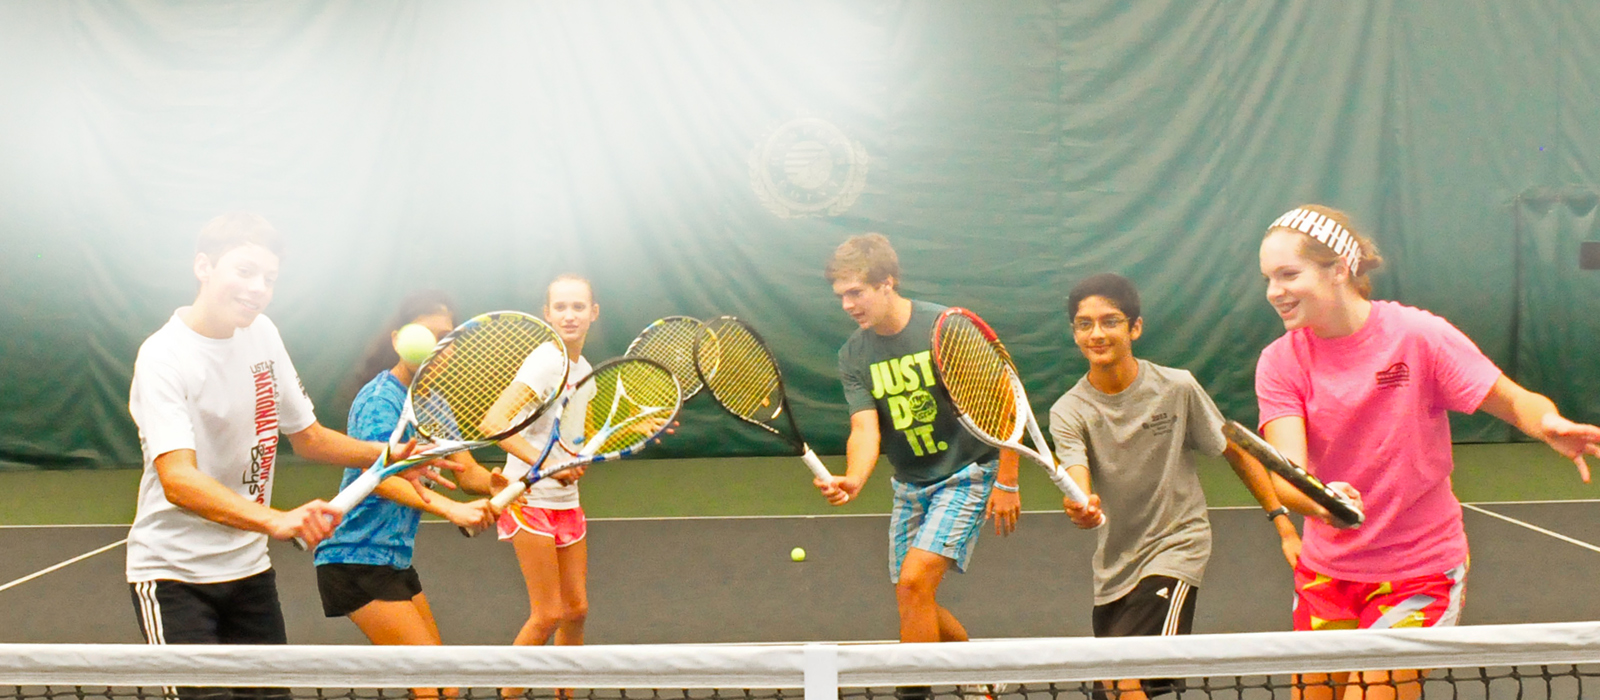 children practicing their tennis swings on tennis court